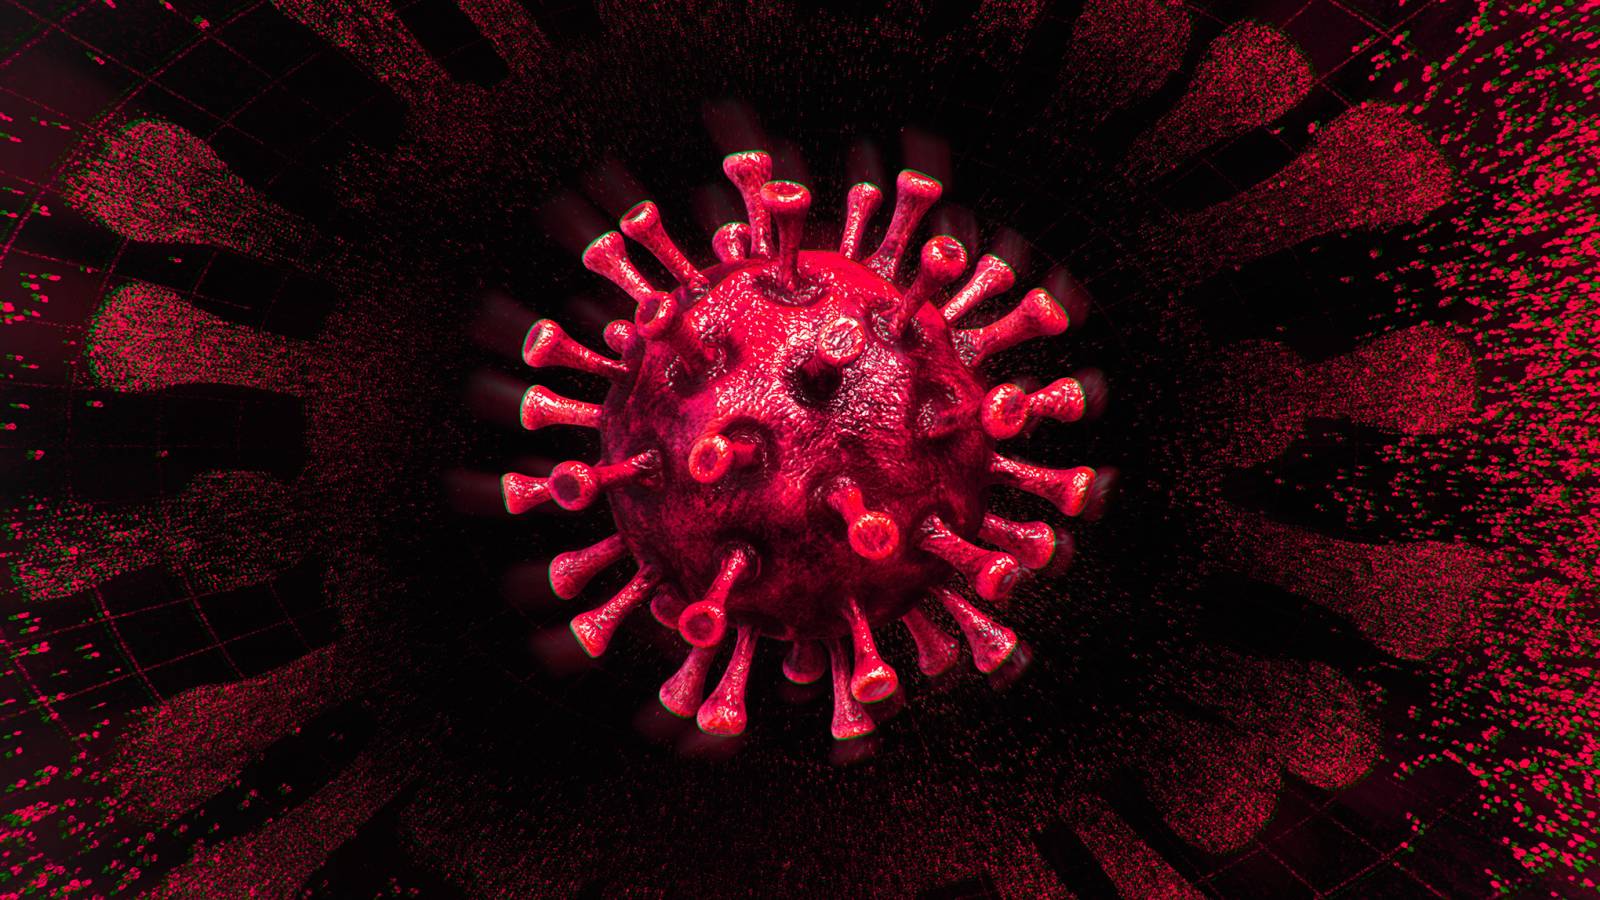 Coronavirus Romania Noua Crestere URIASA Cazuri 24 Martie